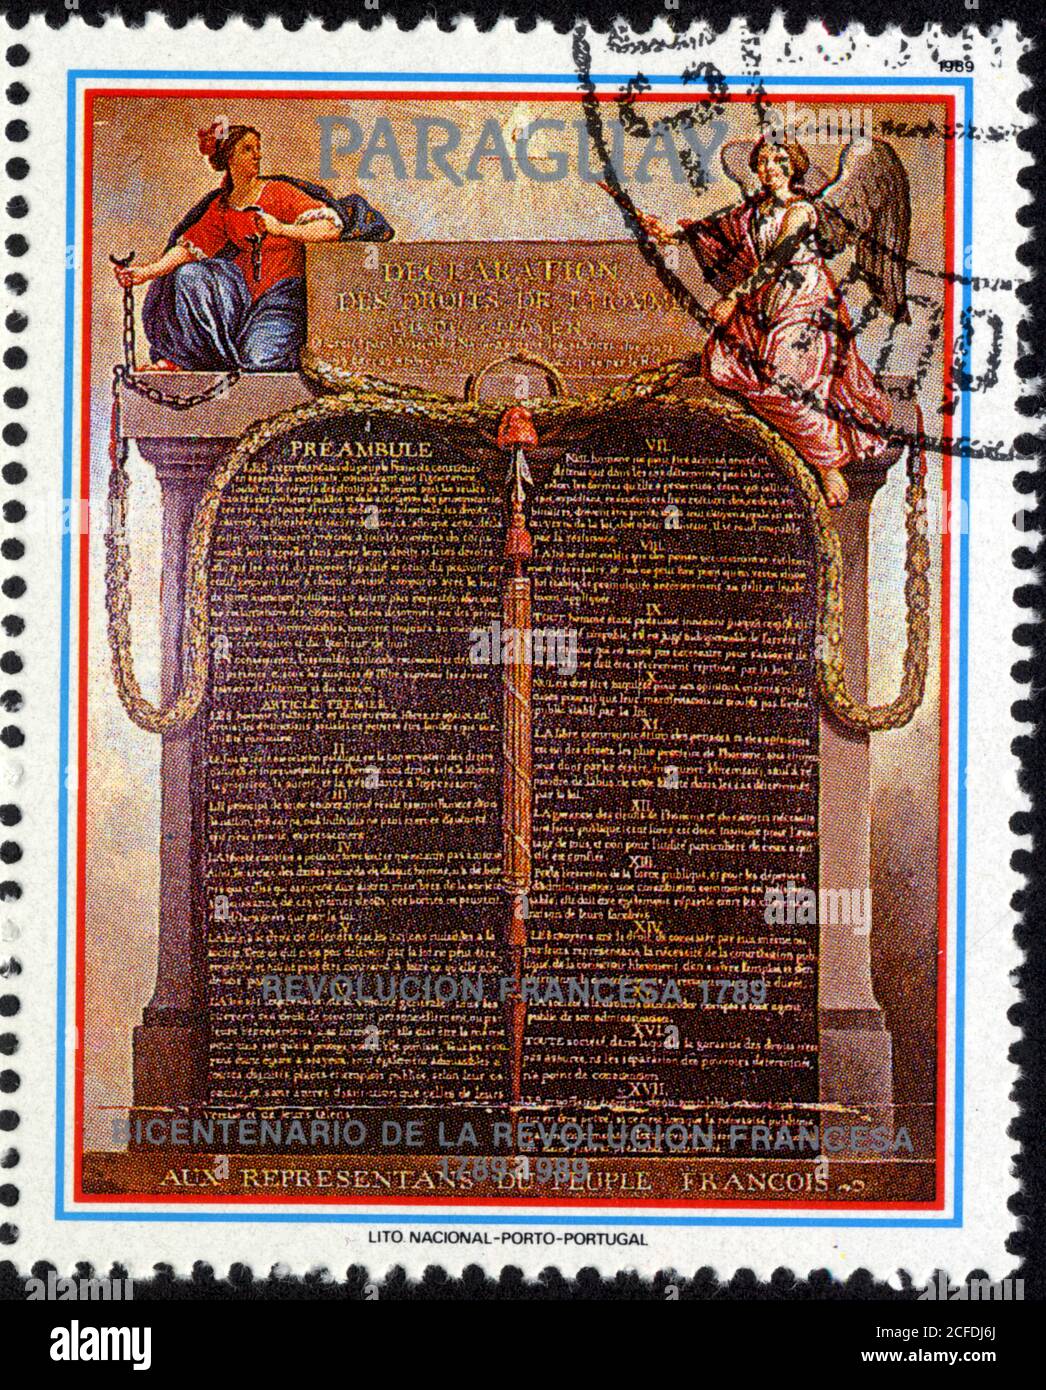 Timbre Revolucion Francesa 1789. Bicentenario de la Revolucion francesa. Paraguay Stock Photo